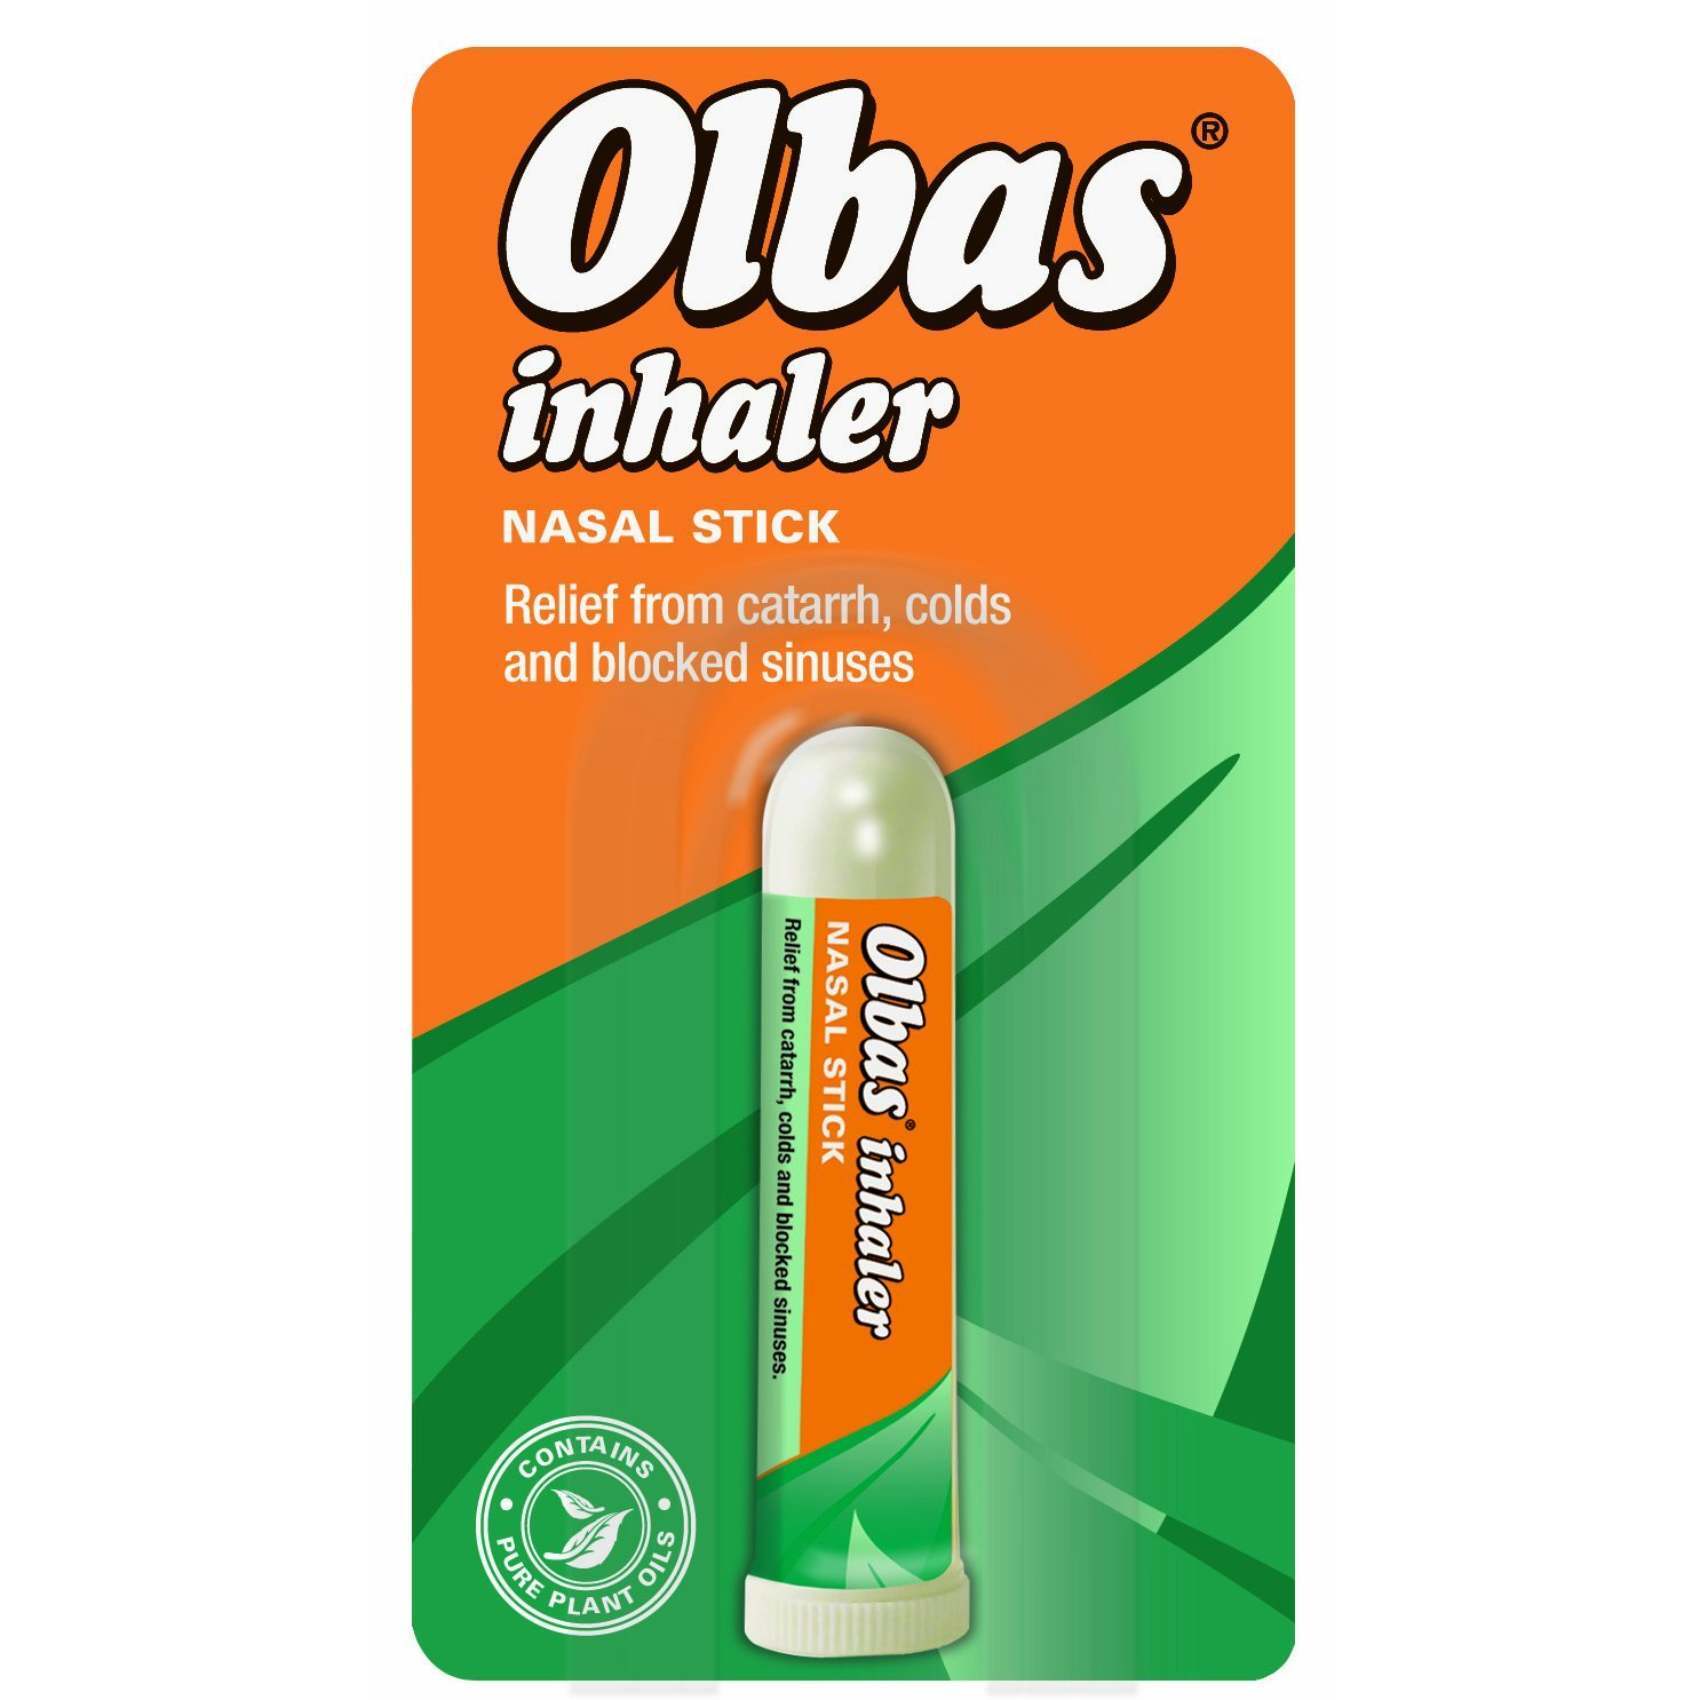 Olbas Inhaler Nasal Stick 695mg White